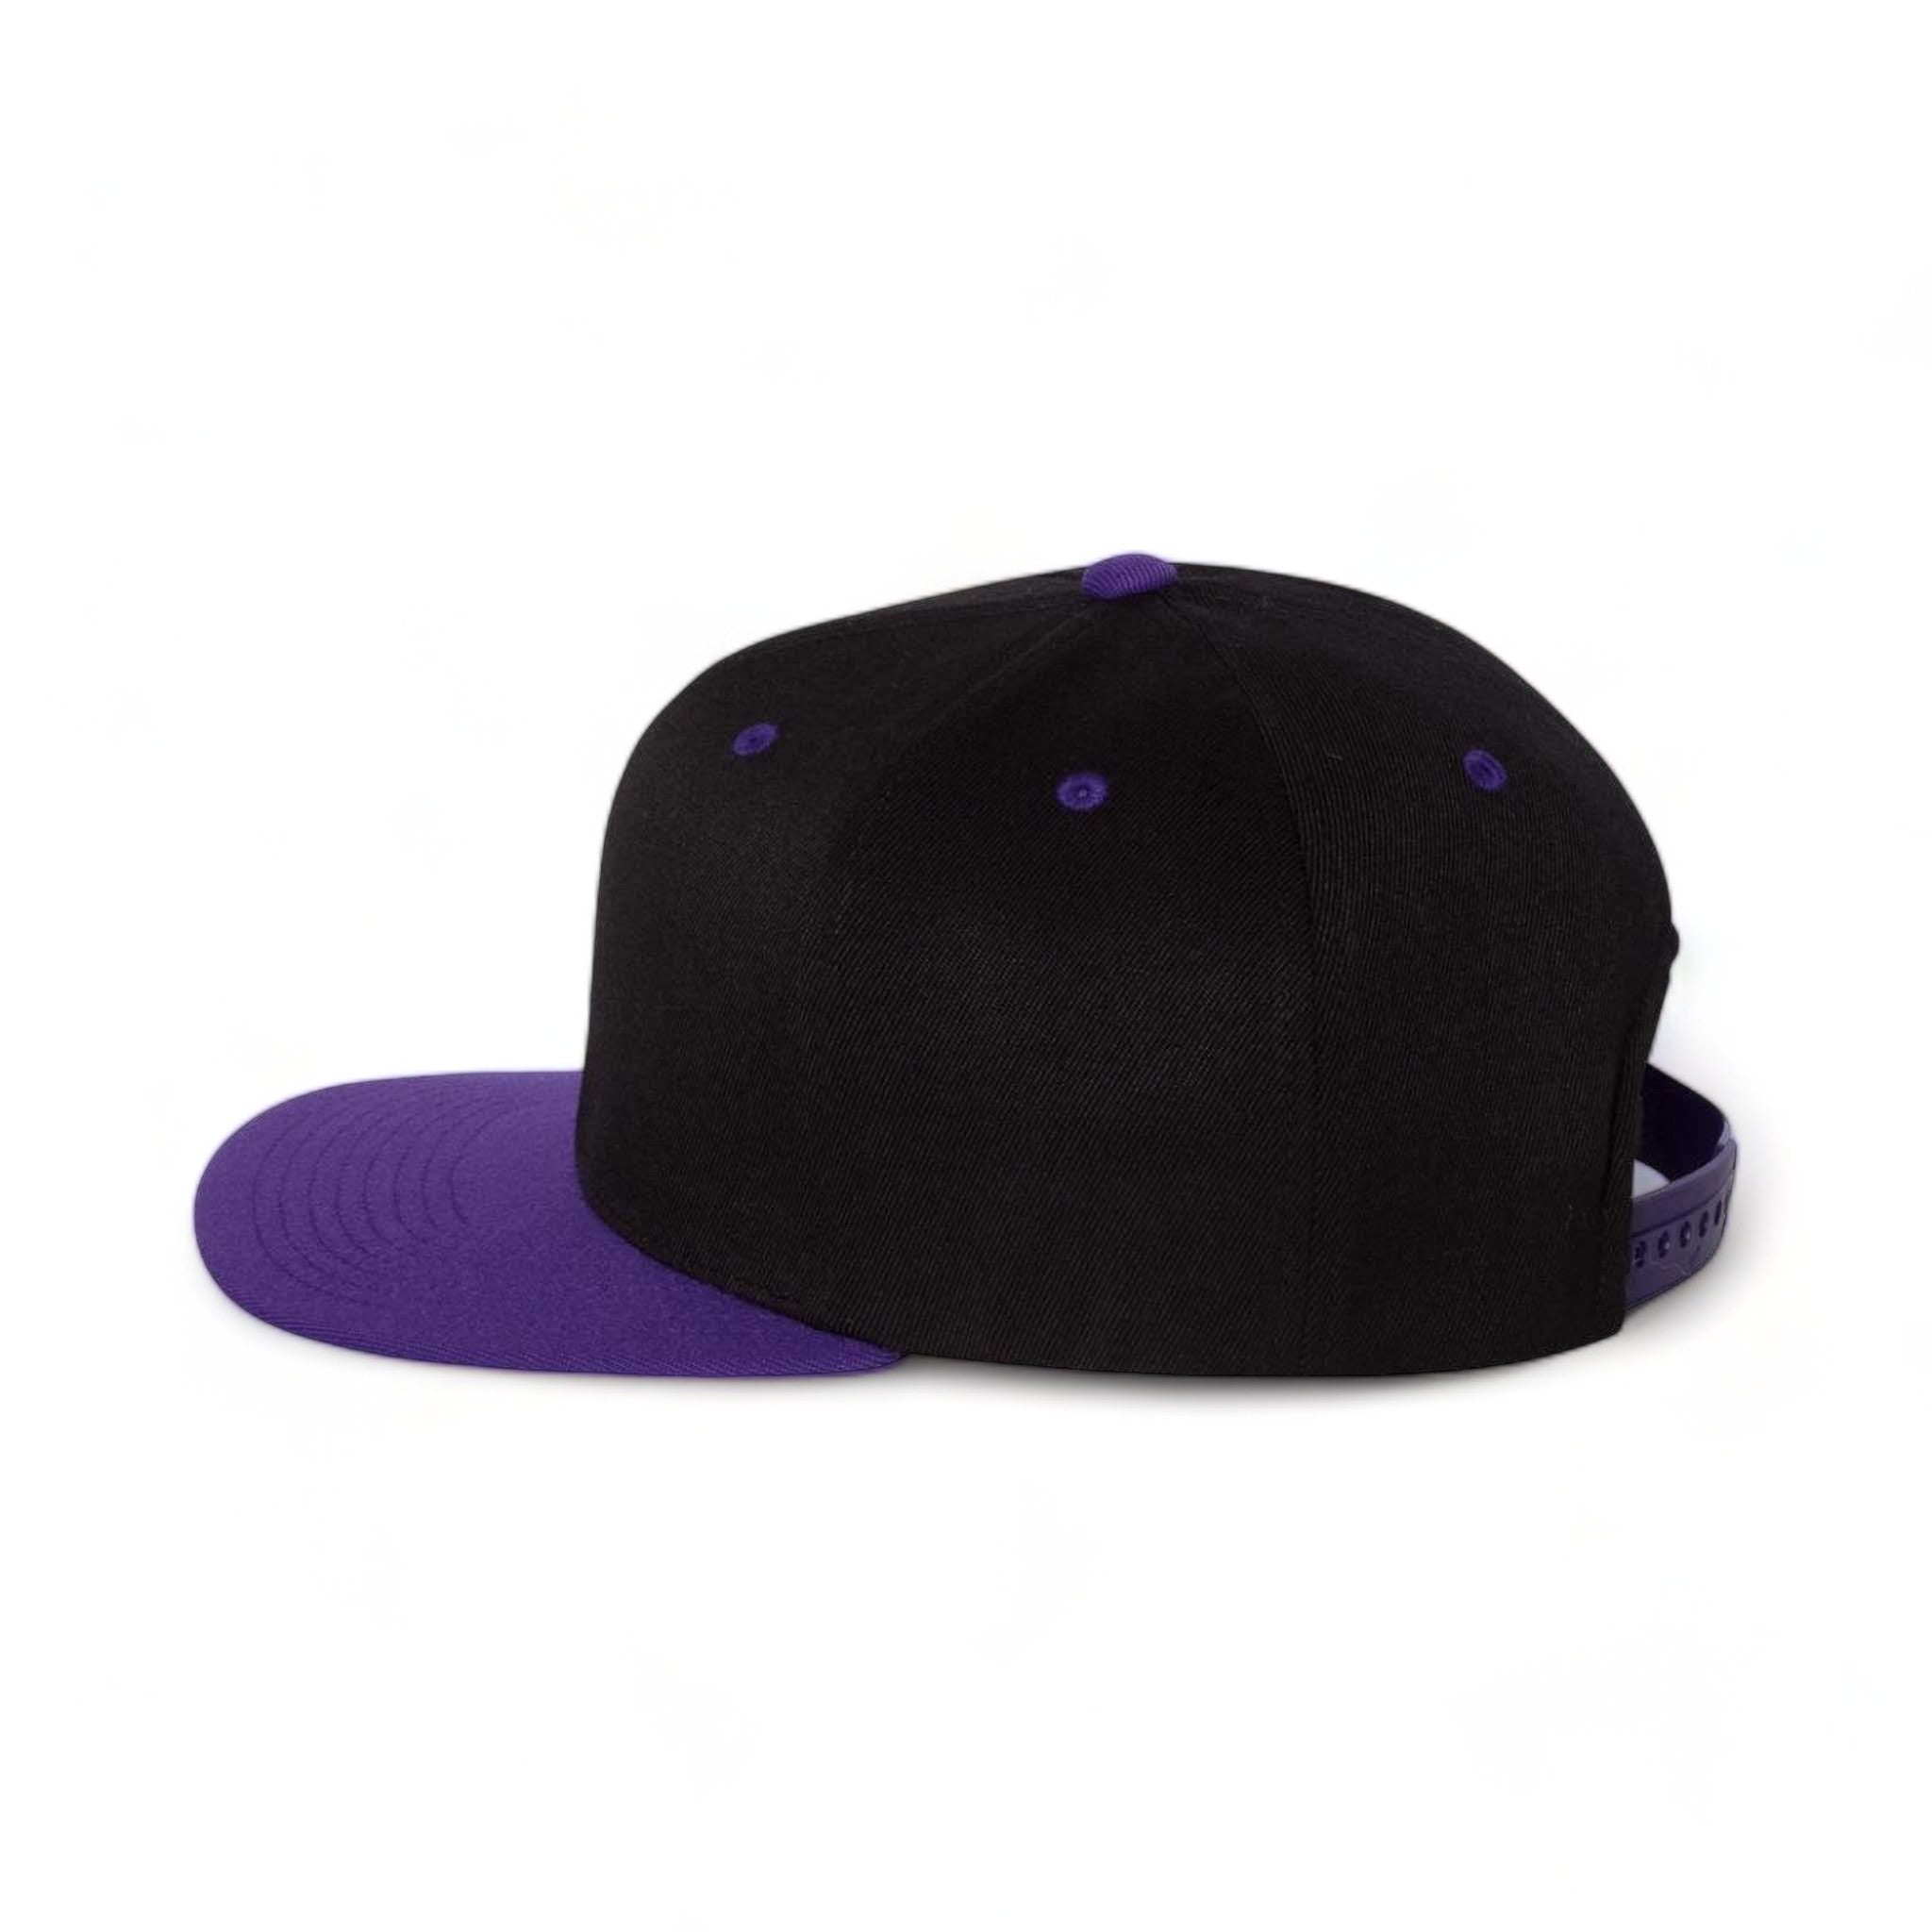 Side view of Flexfit 110F custom hat in black and purple